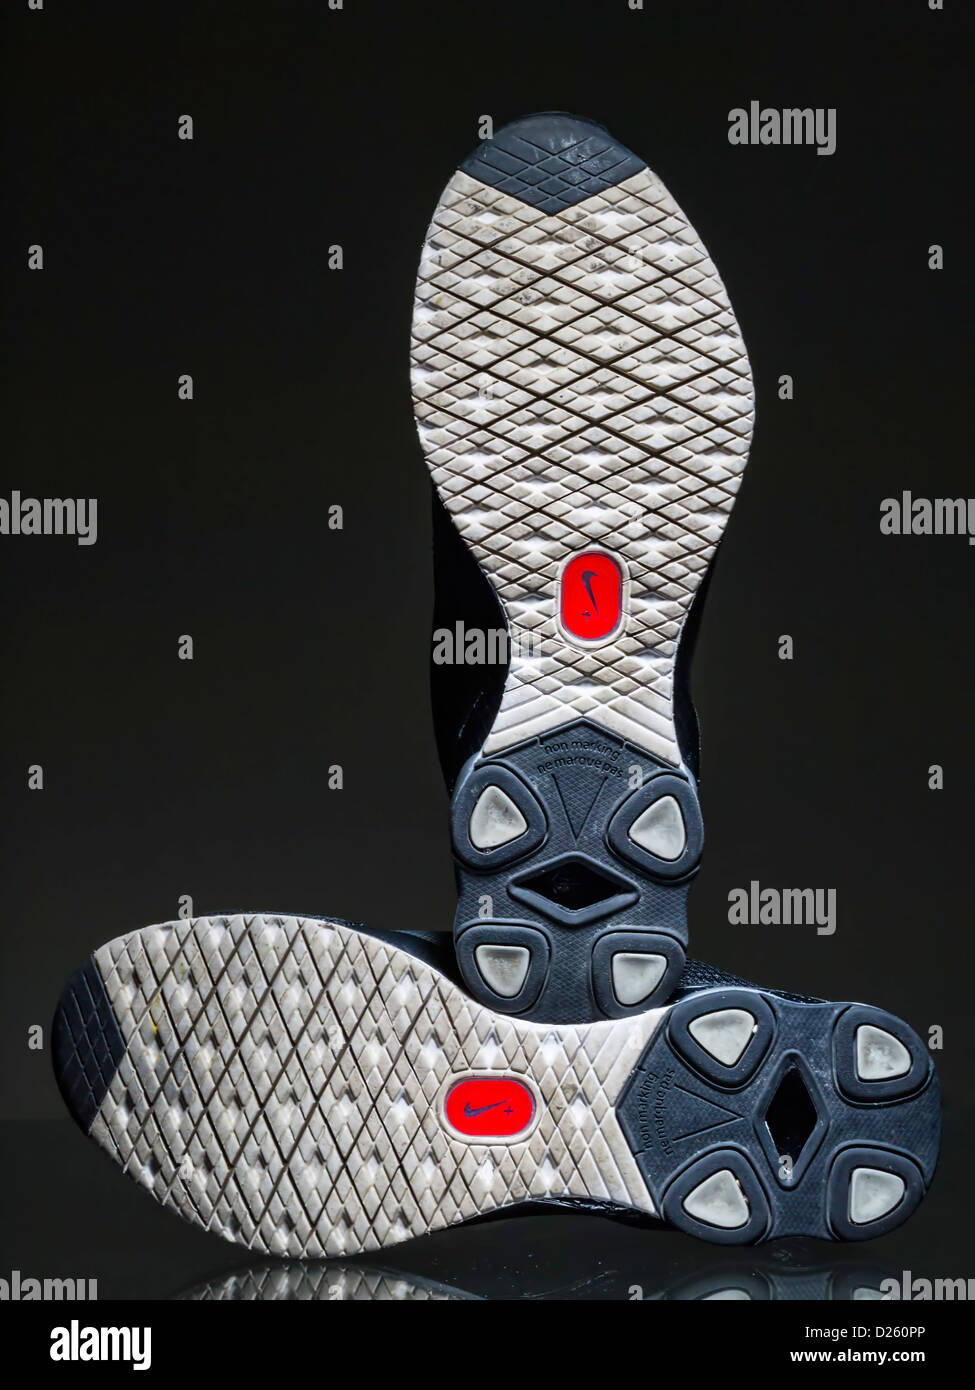 Nike+ sensor logo on running shoes' soles Stock Photo - Alamy